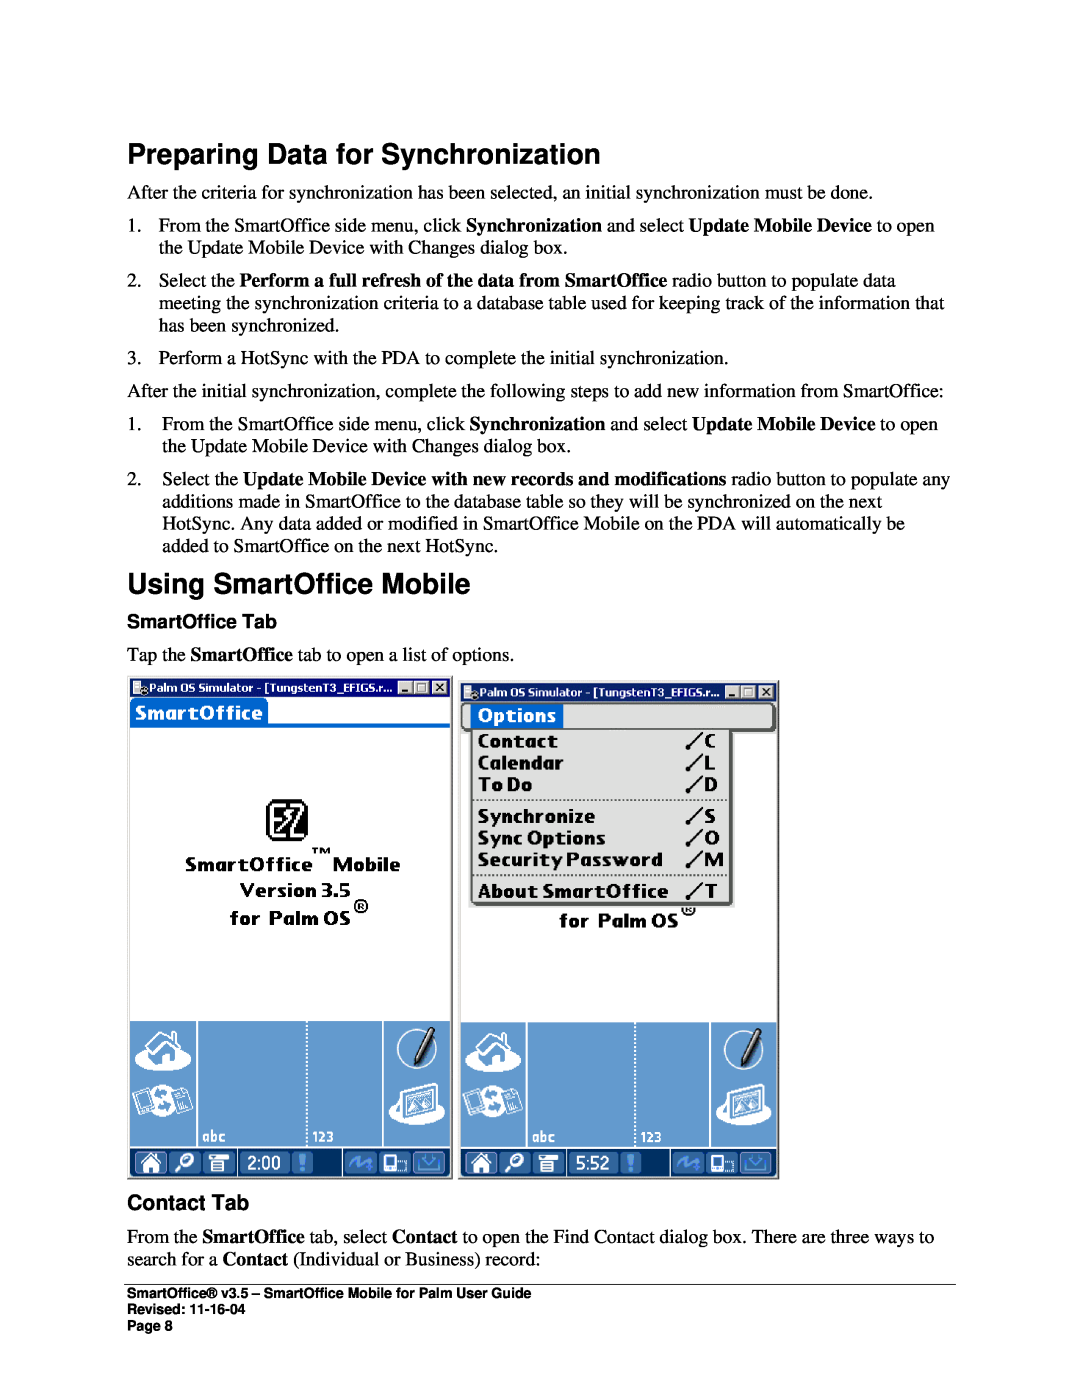 Palm manual Preparing Data for Synchronization, Using SmartOffice Mobile, Contact Tab, SmartOffice Tab 